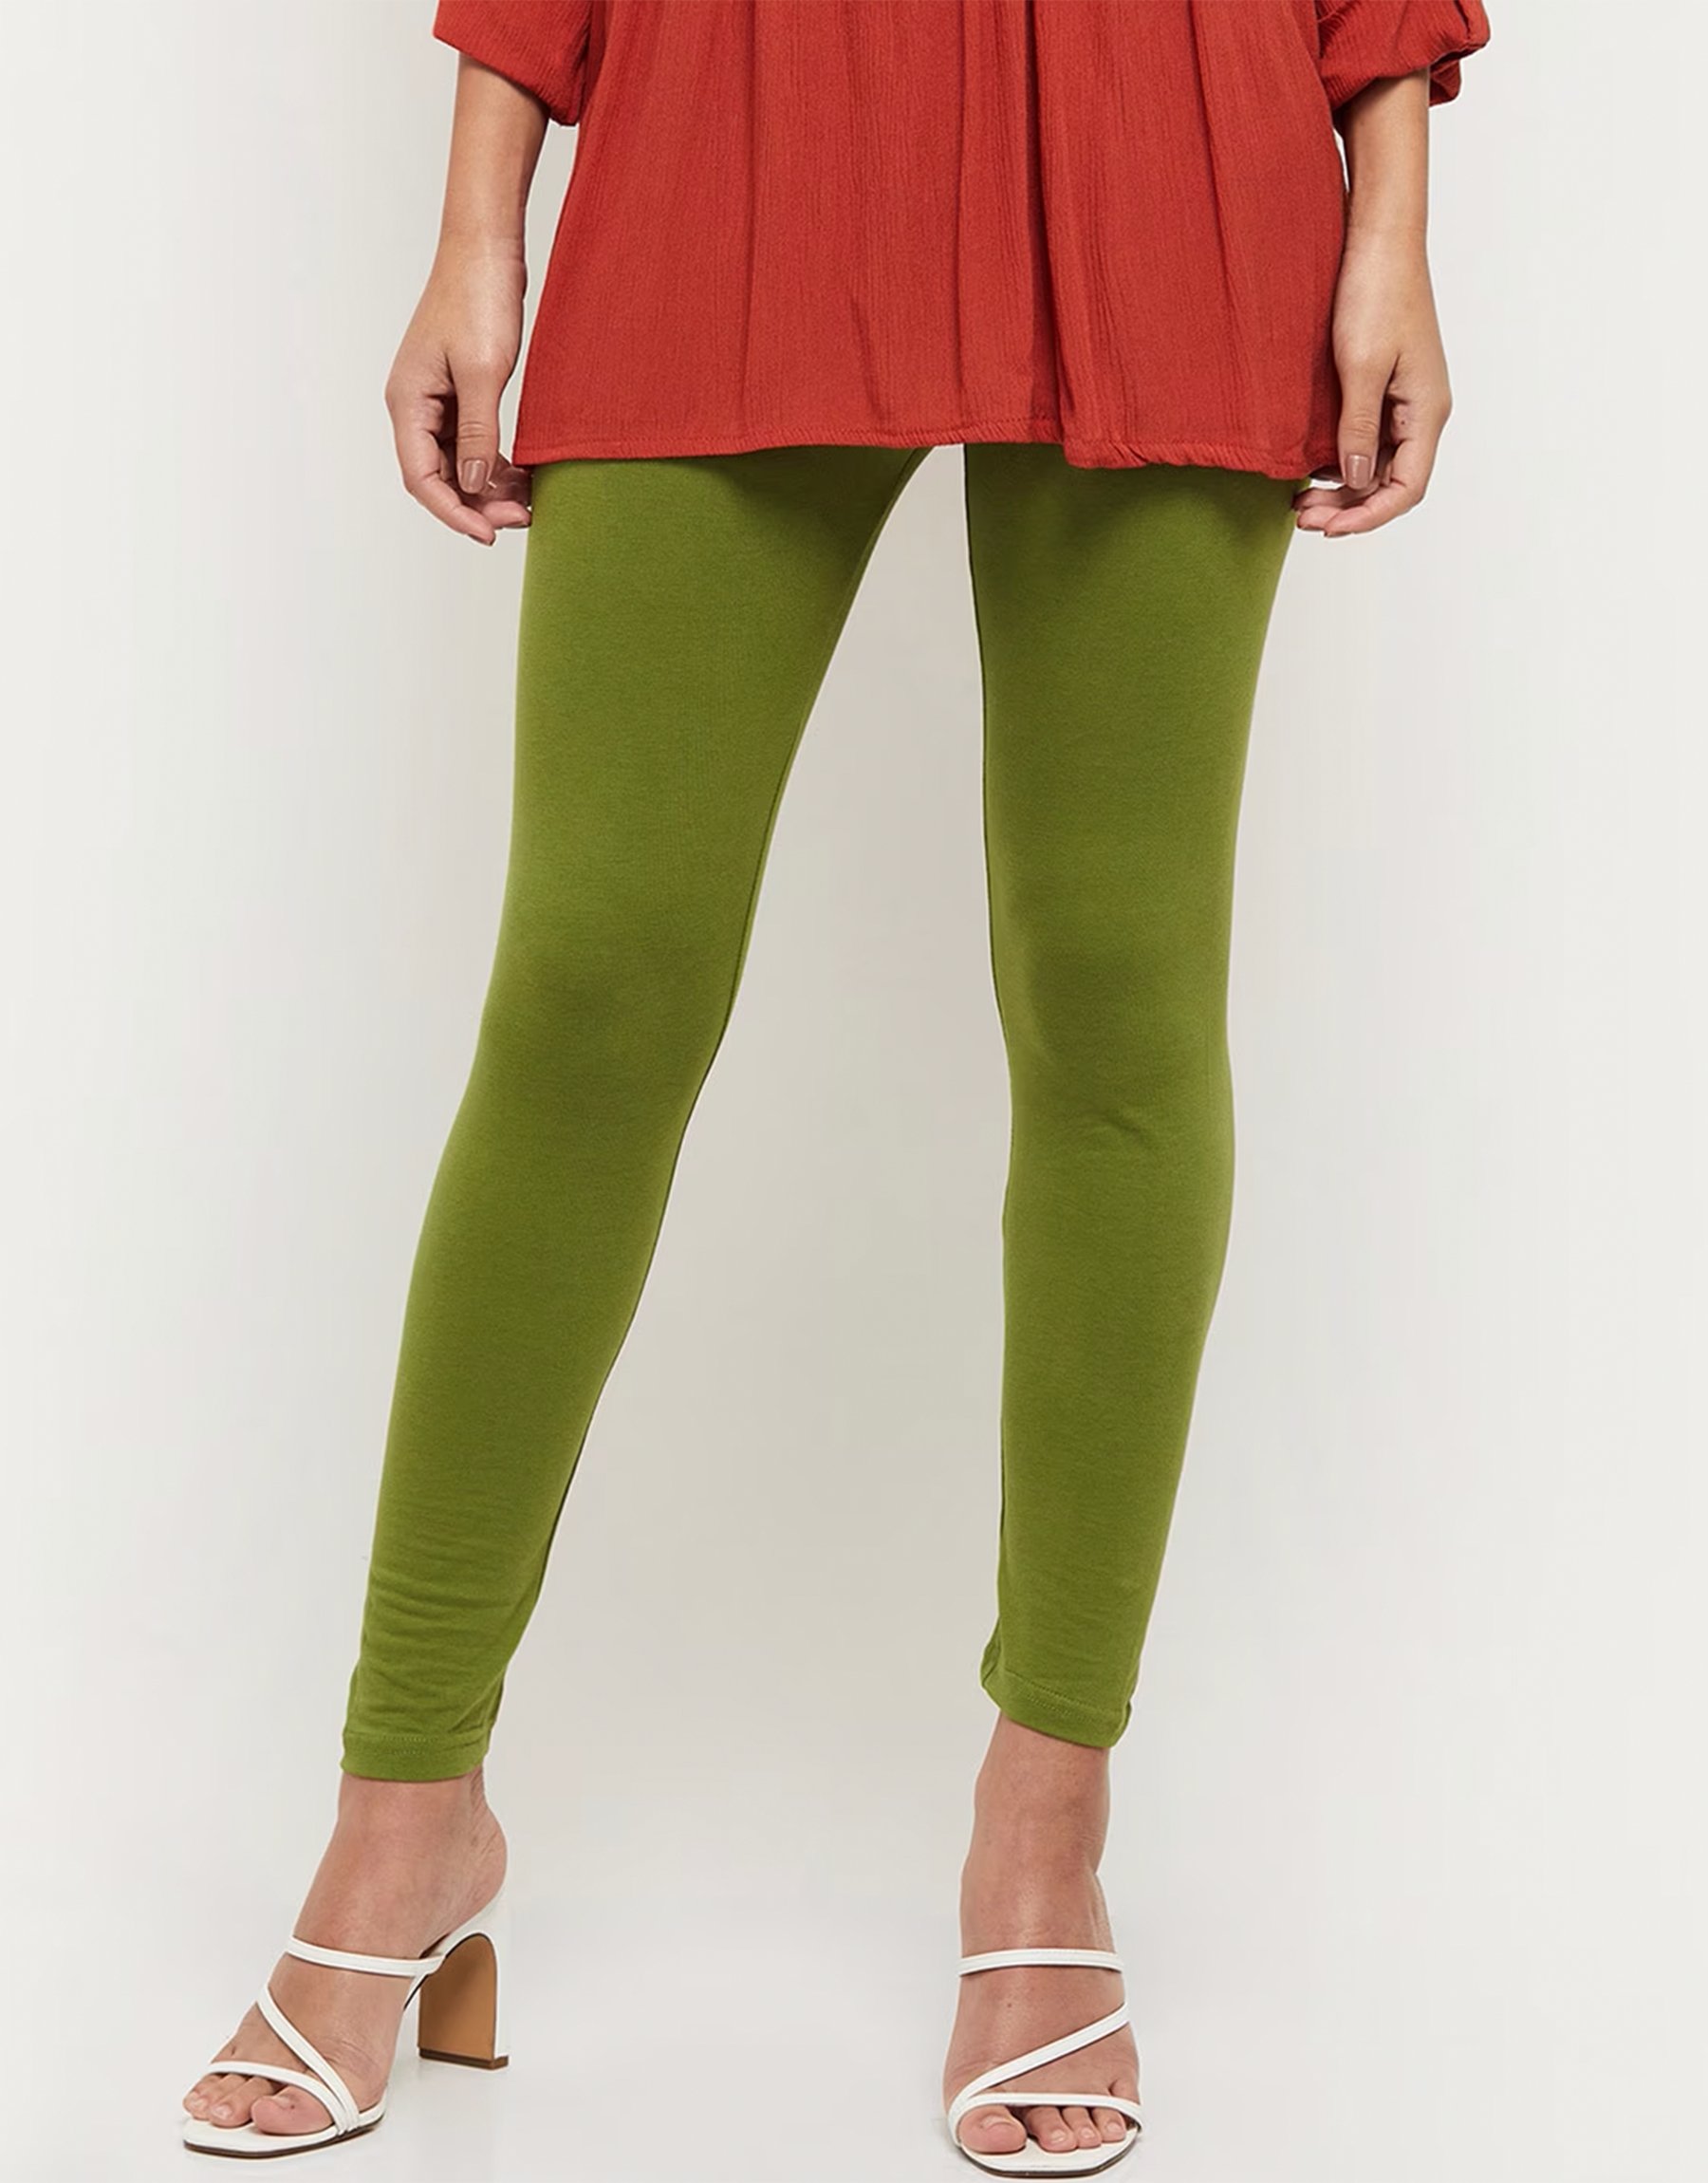 Buy Green Leggings for Women by LYRA Online | Ajio.com